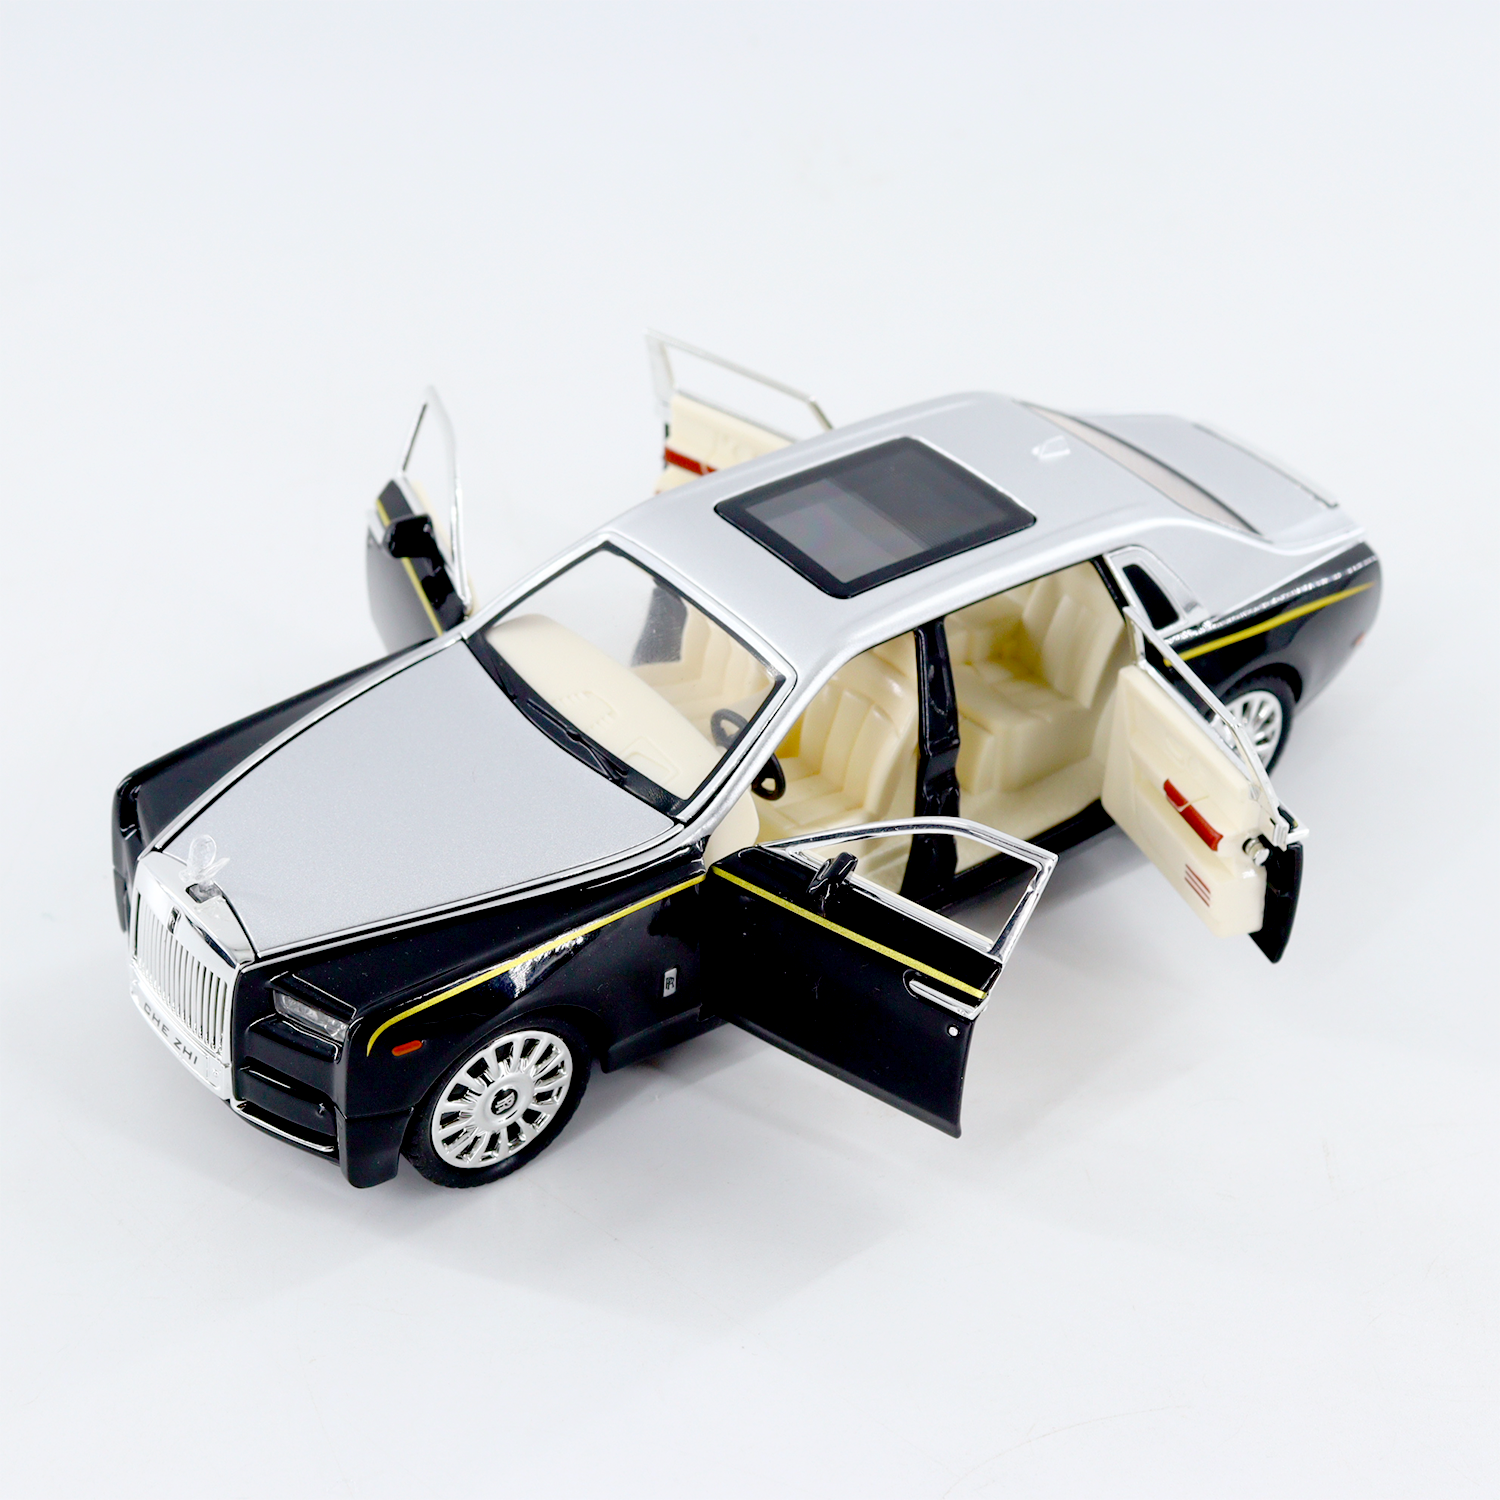 Rolls Royce Phantom Metal die cast Car Toy with Sound (Black & Silver)